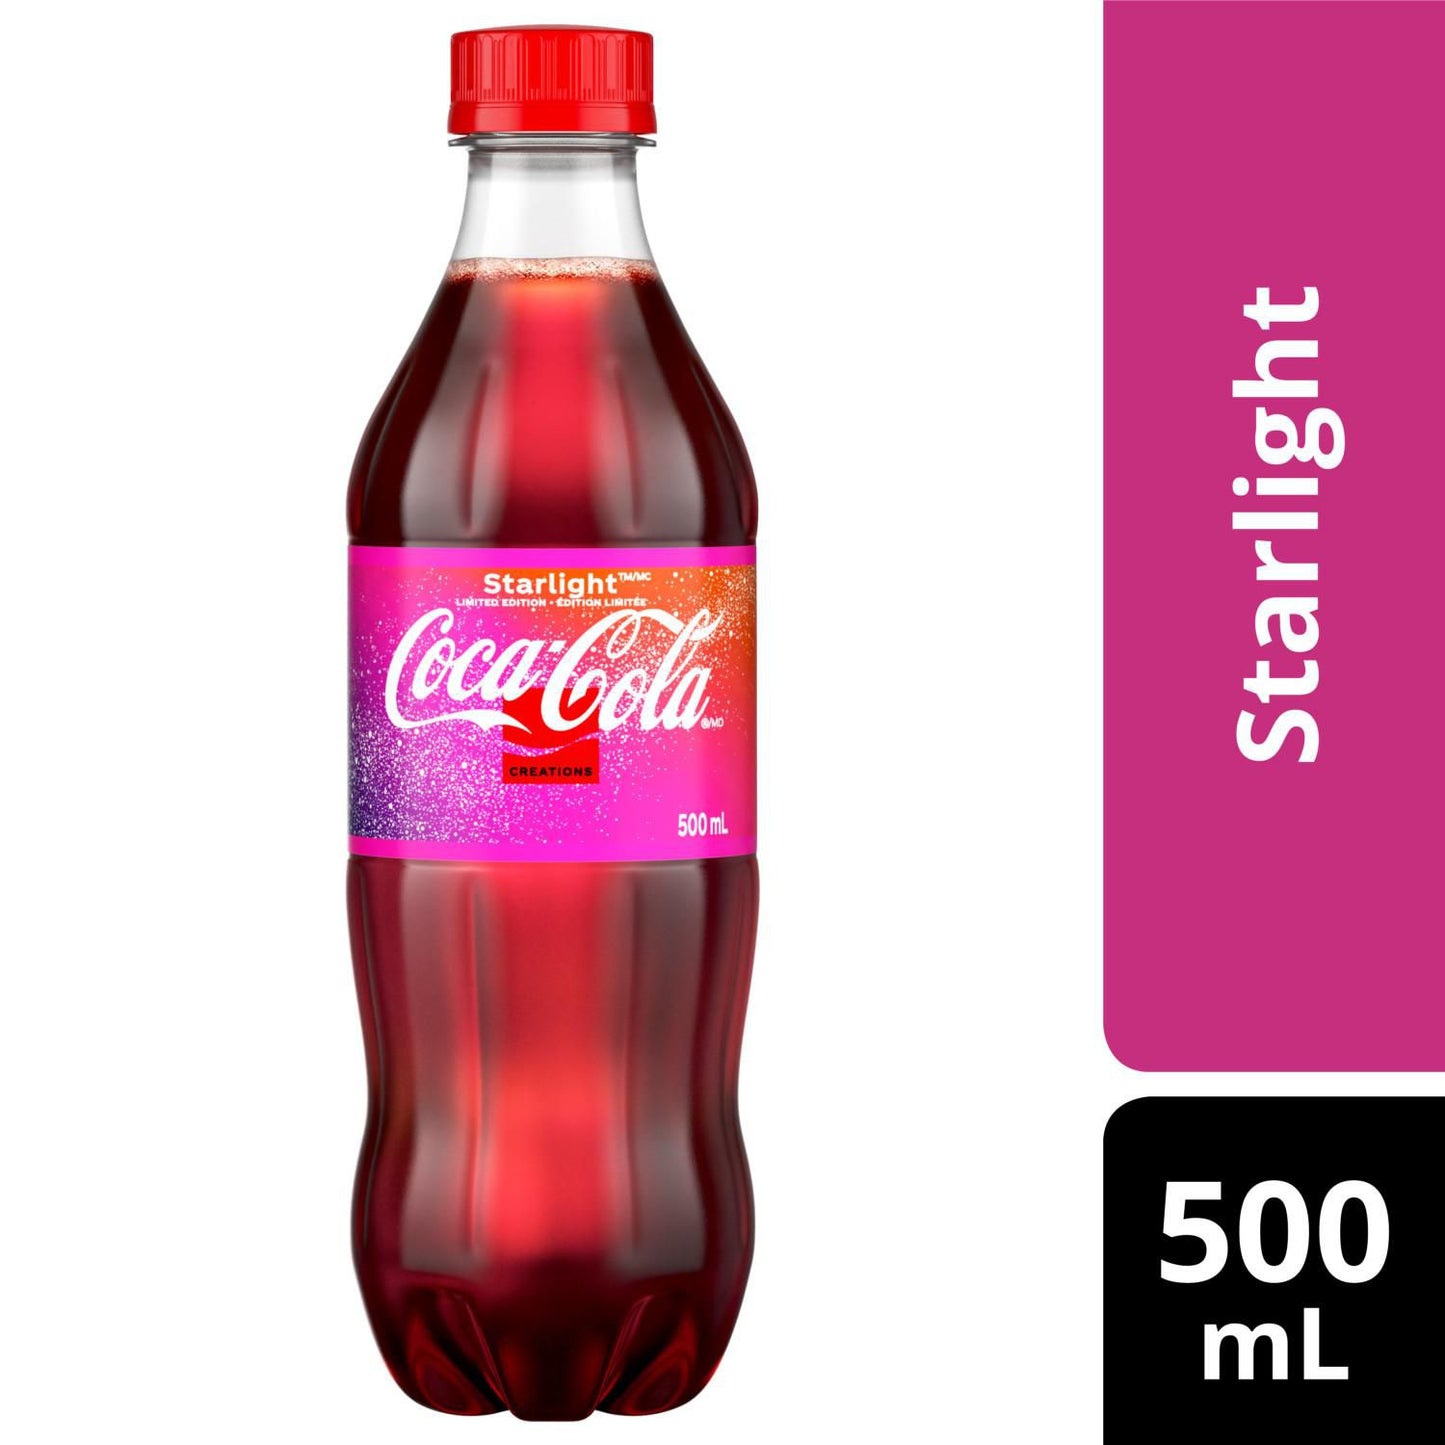 Coca-Cola Creations, Limited Edition Starlight, 500 mL